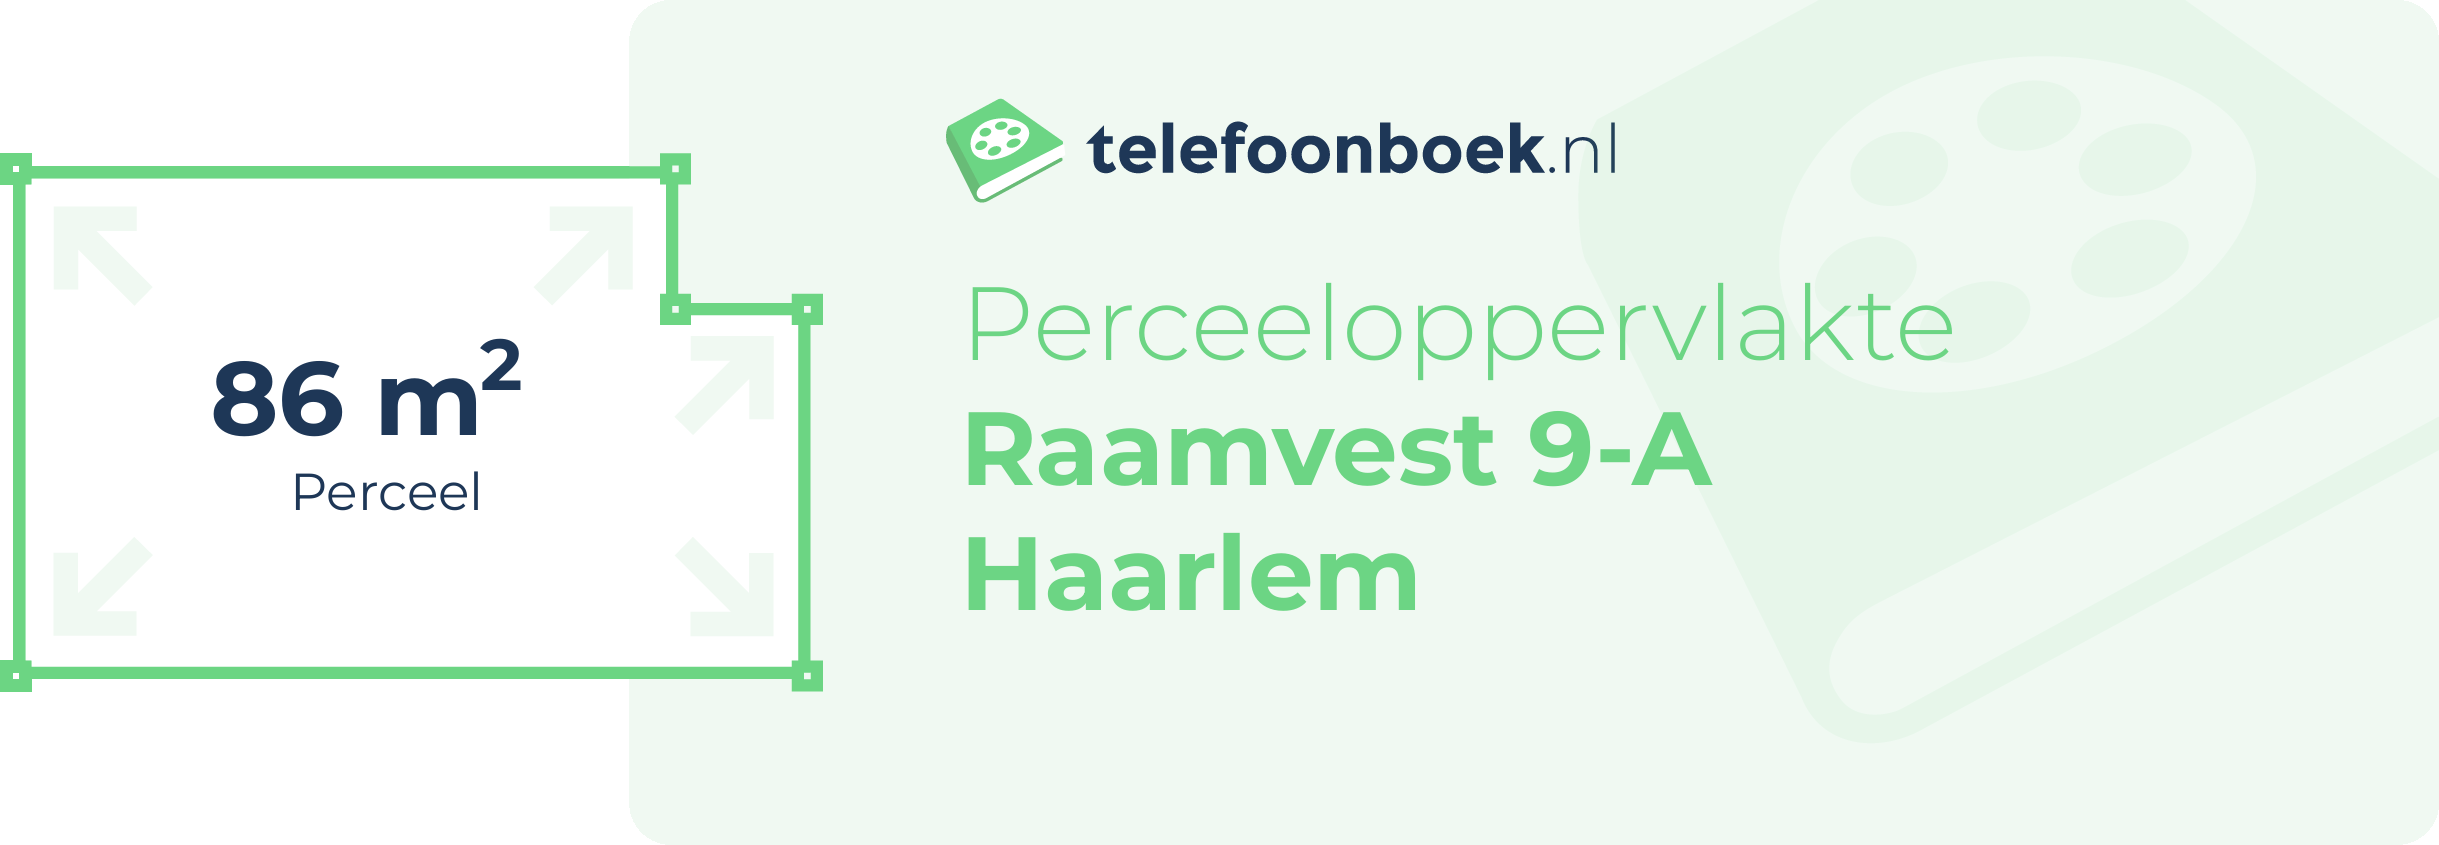 Perceeloppervlakte Raamvest 9-A Haarlem